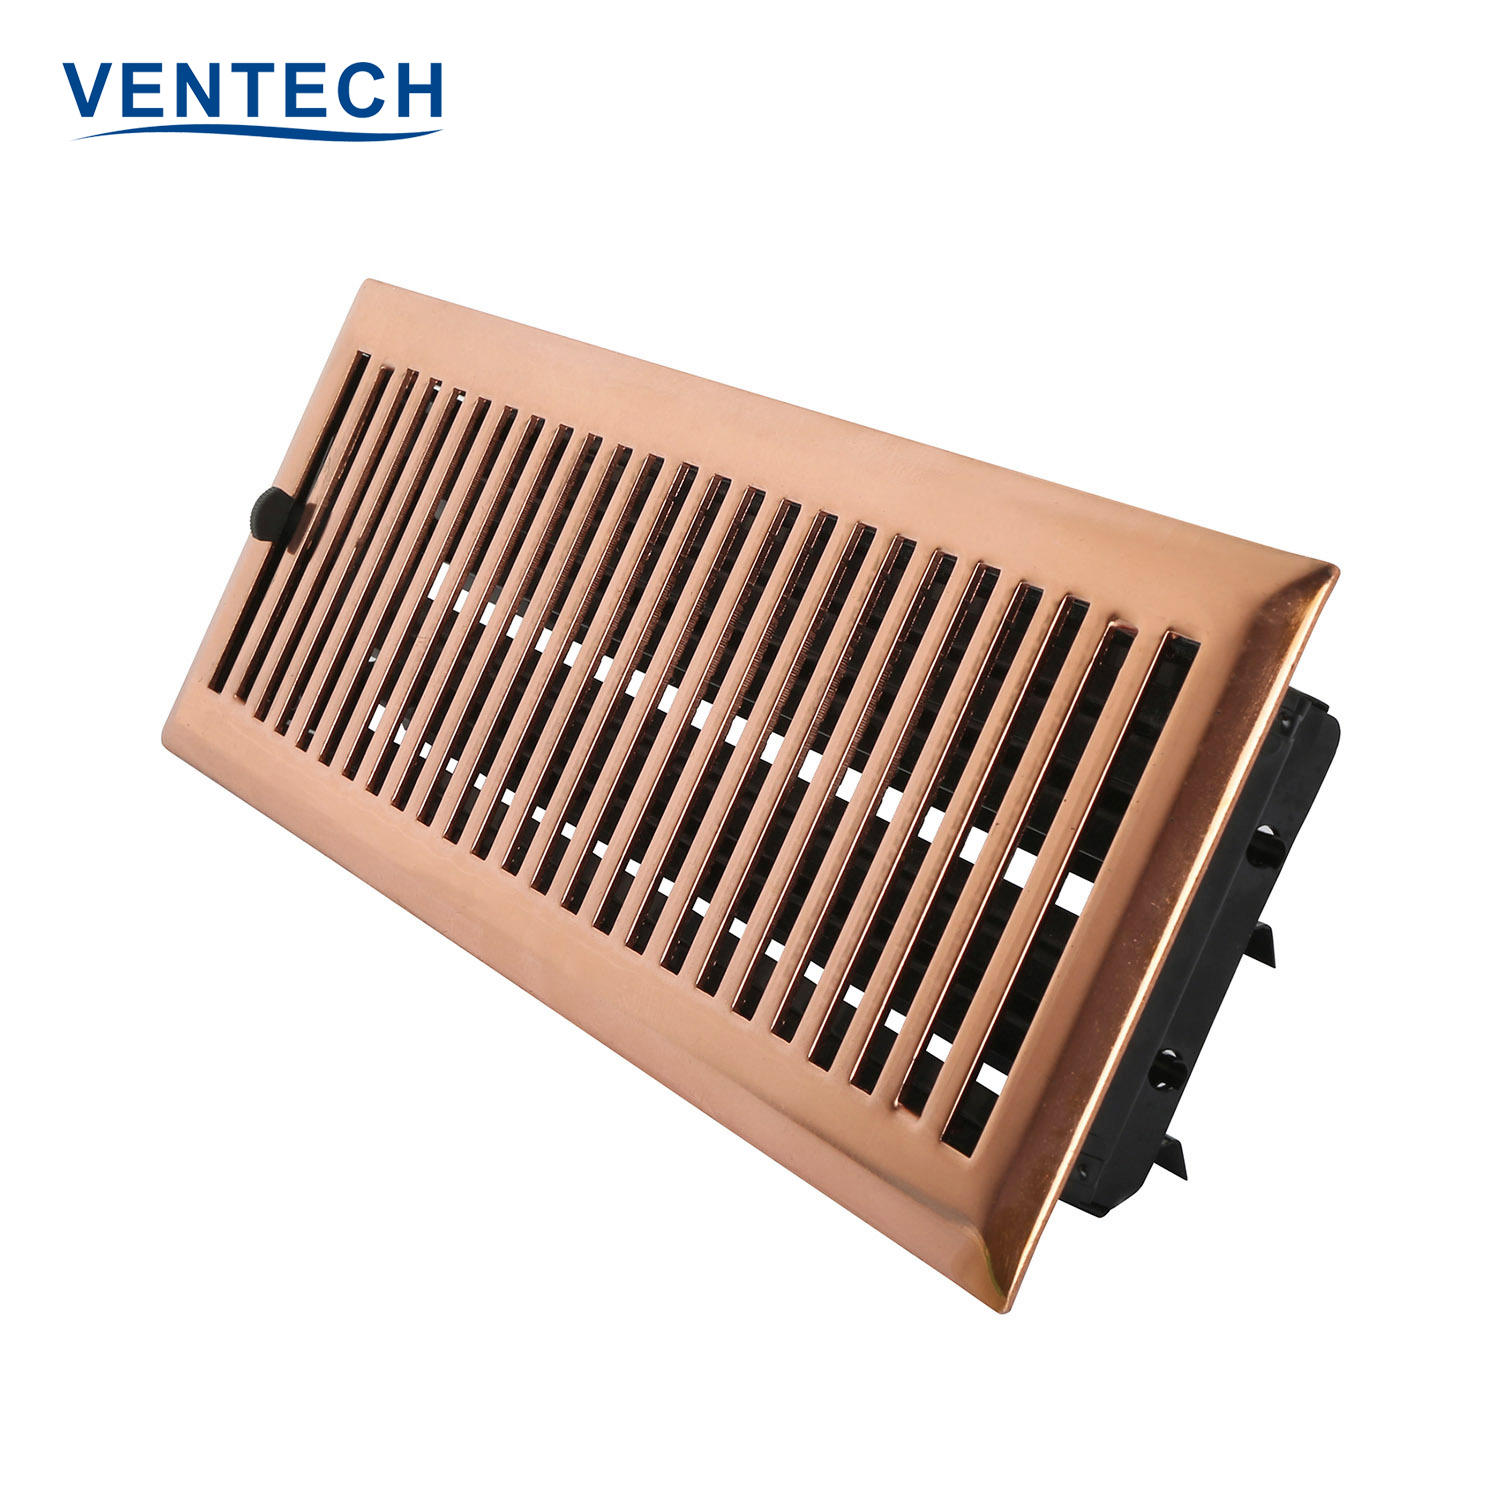 Ventech Iron Supply Air Floorregister Grille